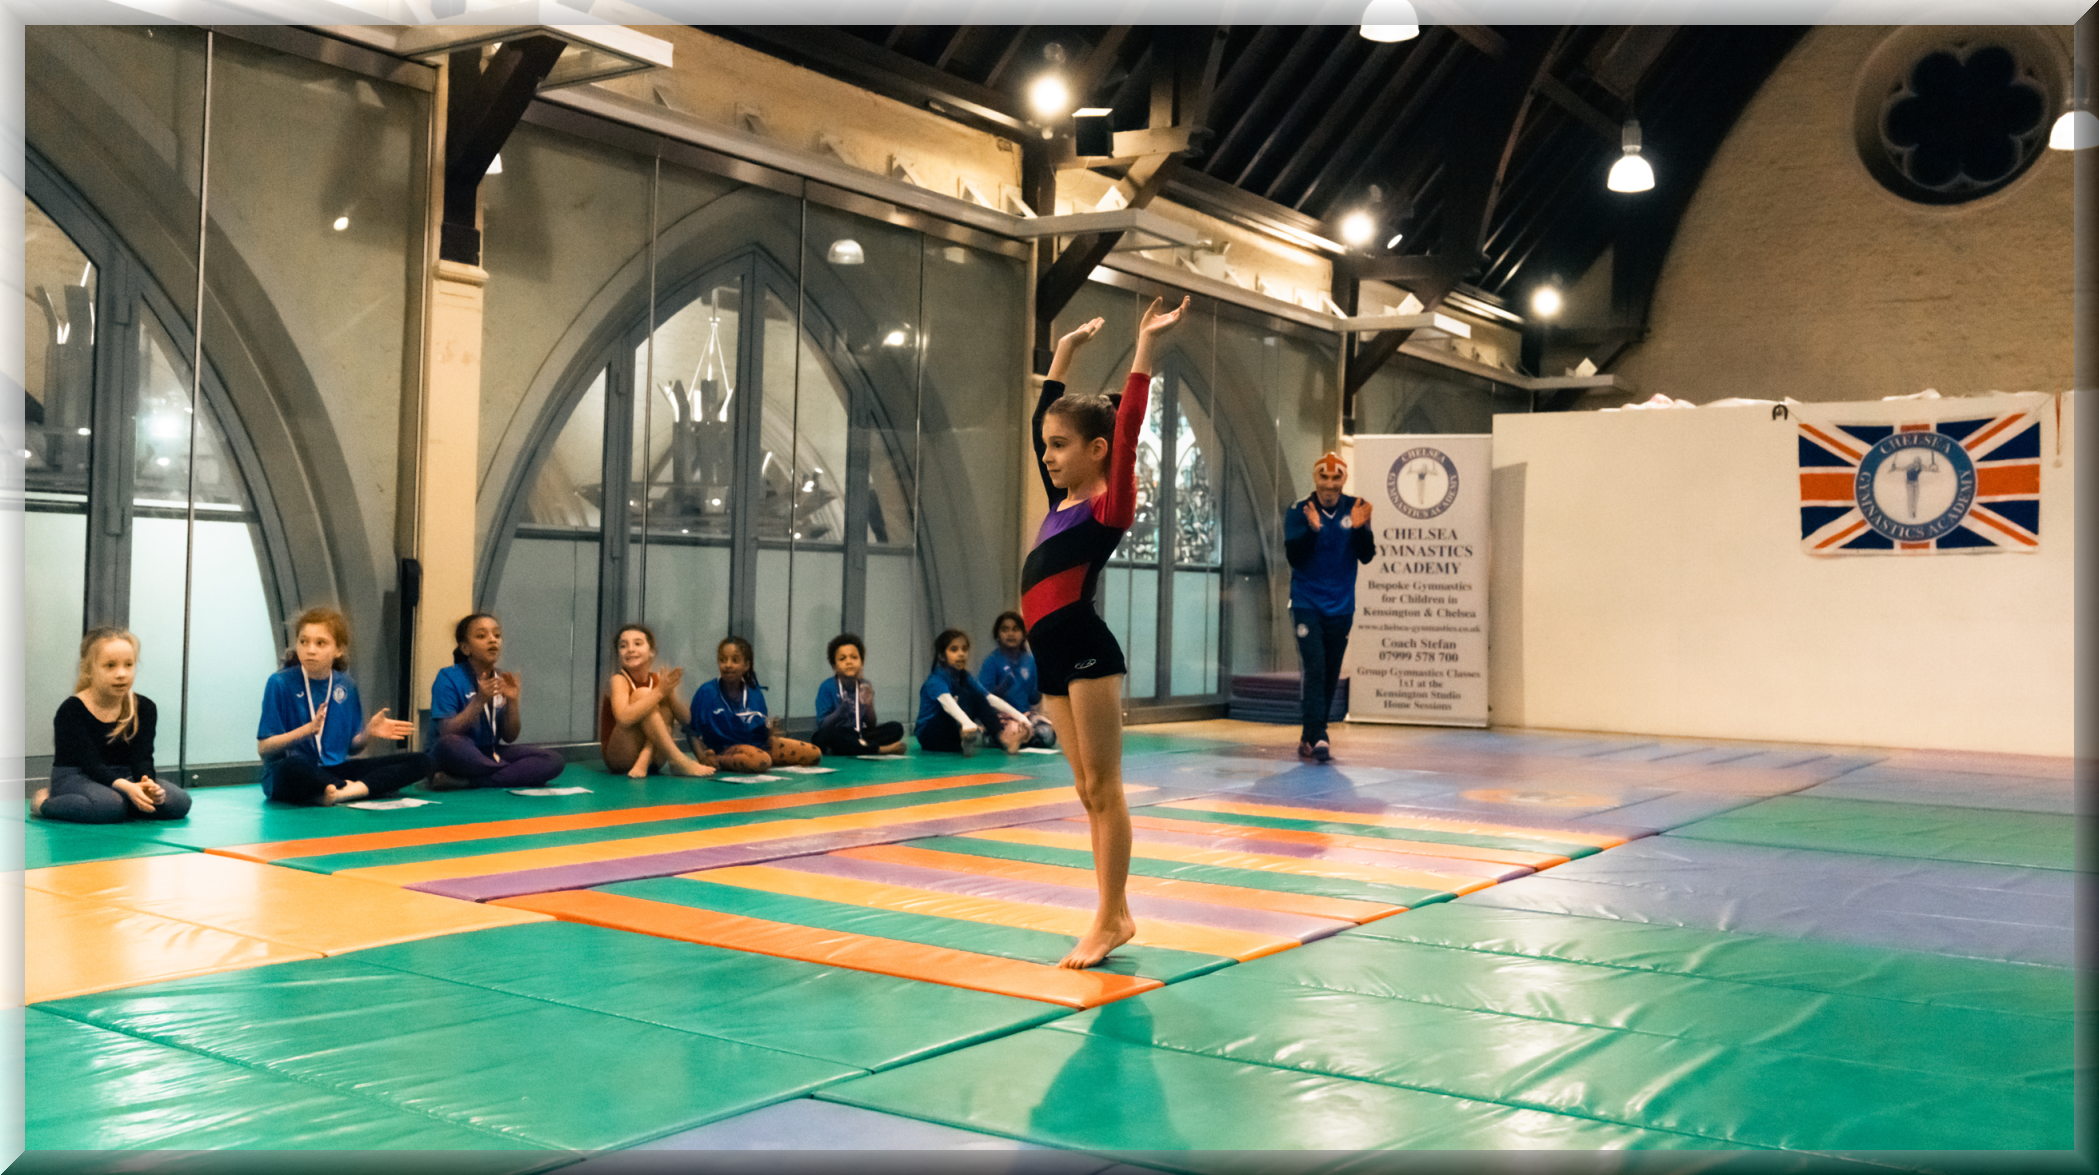 Events at Chelsea Gymnastics Academy